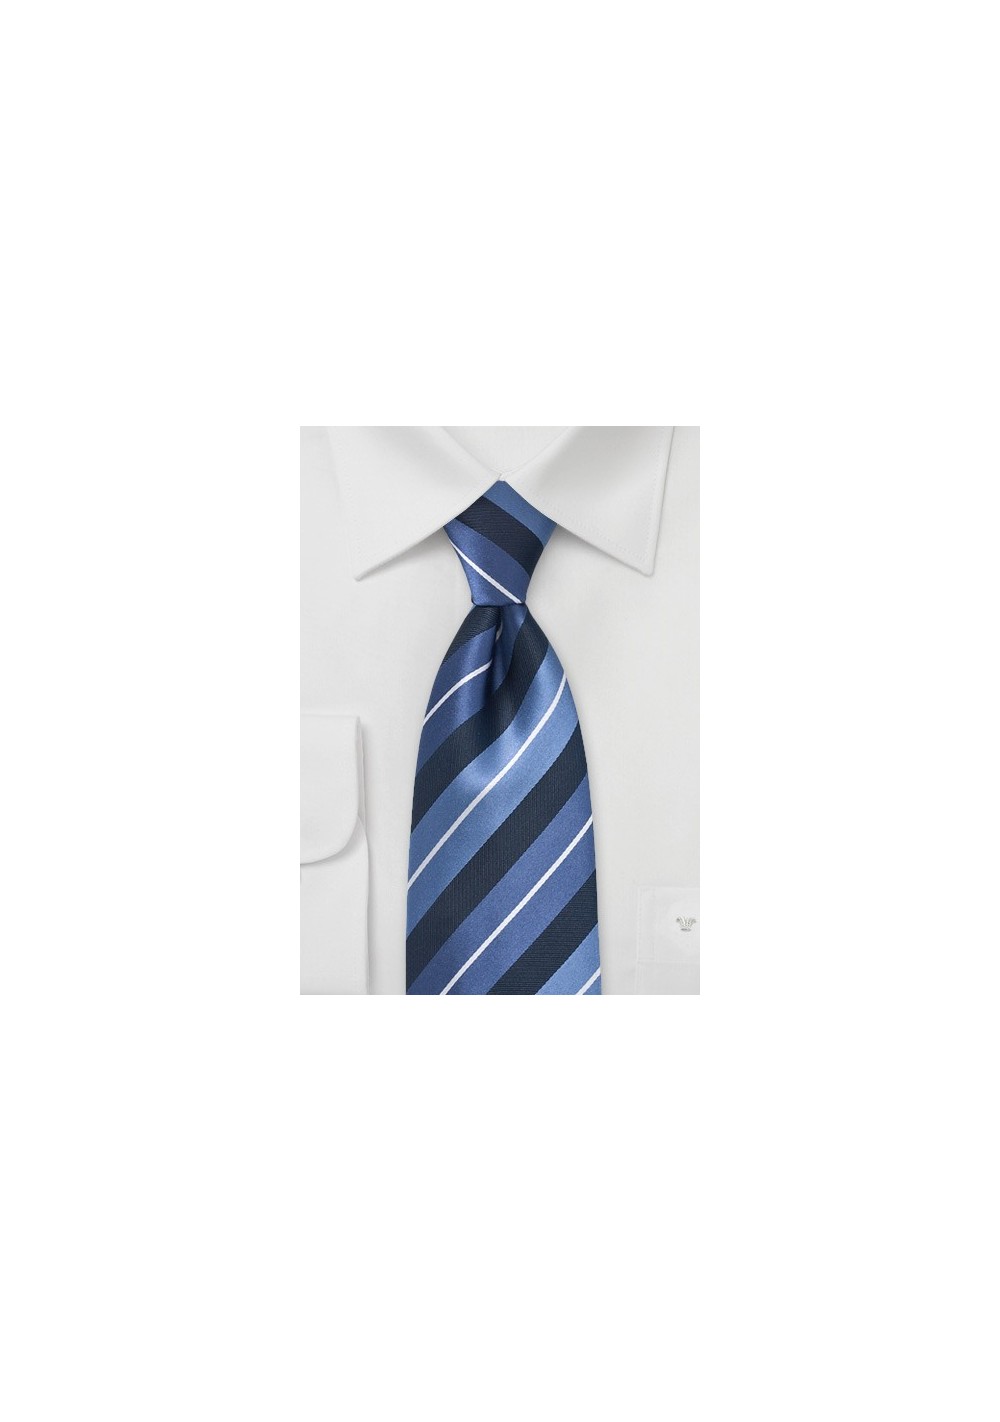 Modern Striped Tie in Nautical Blues